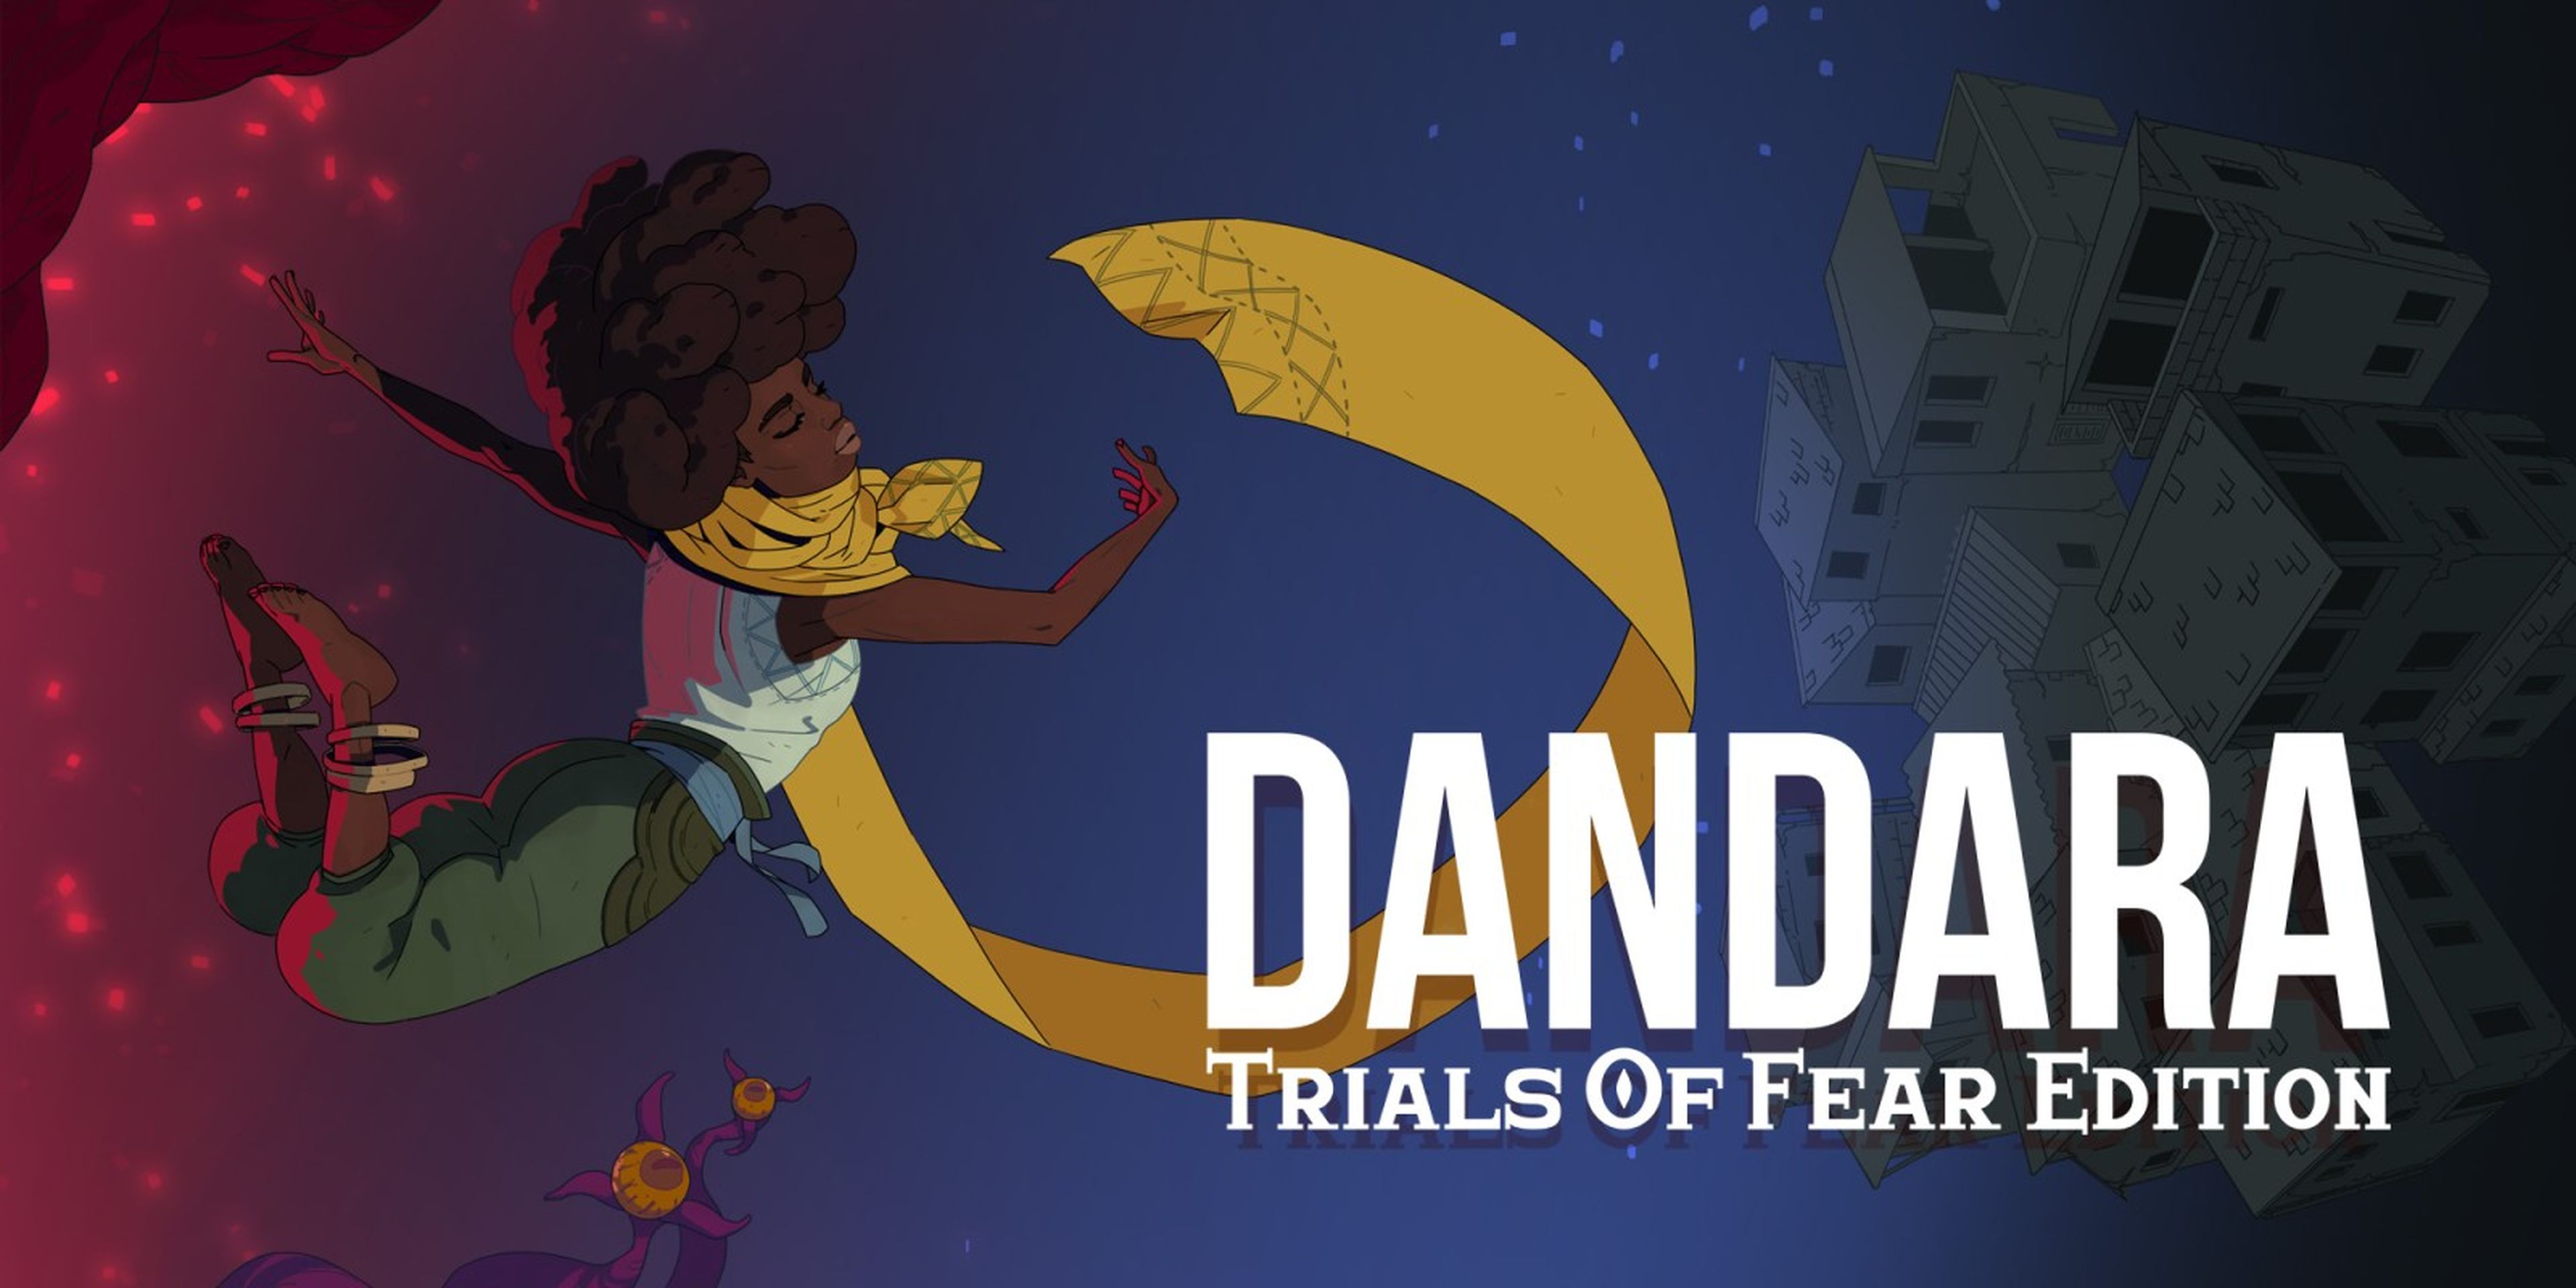 Dandara Trials of Fear Edition